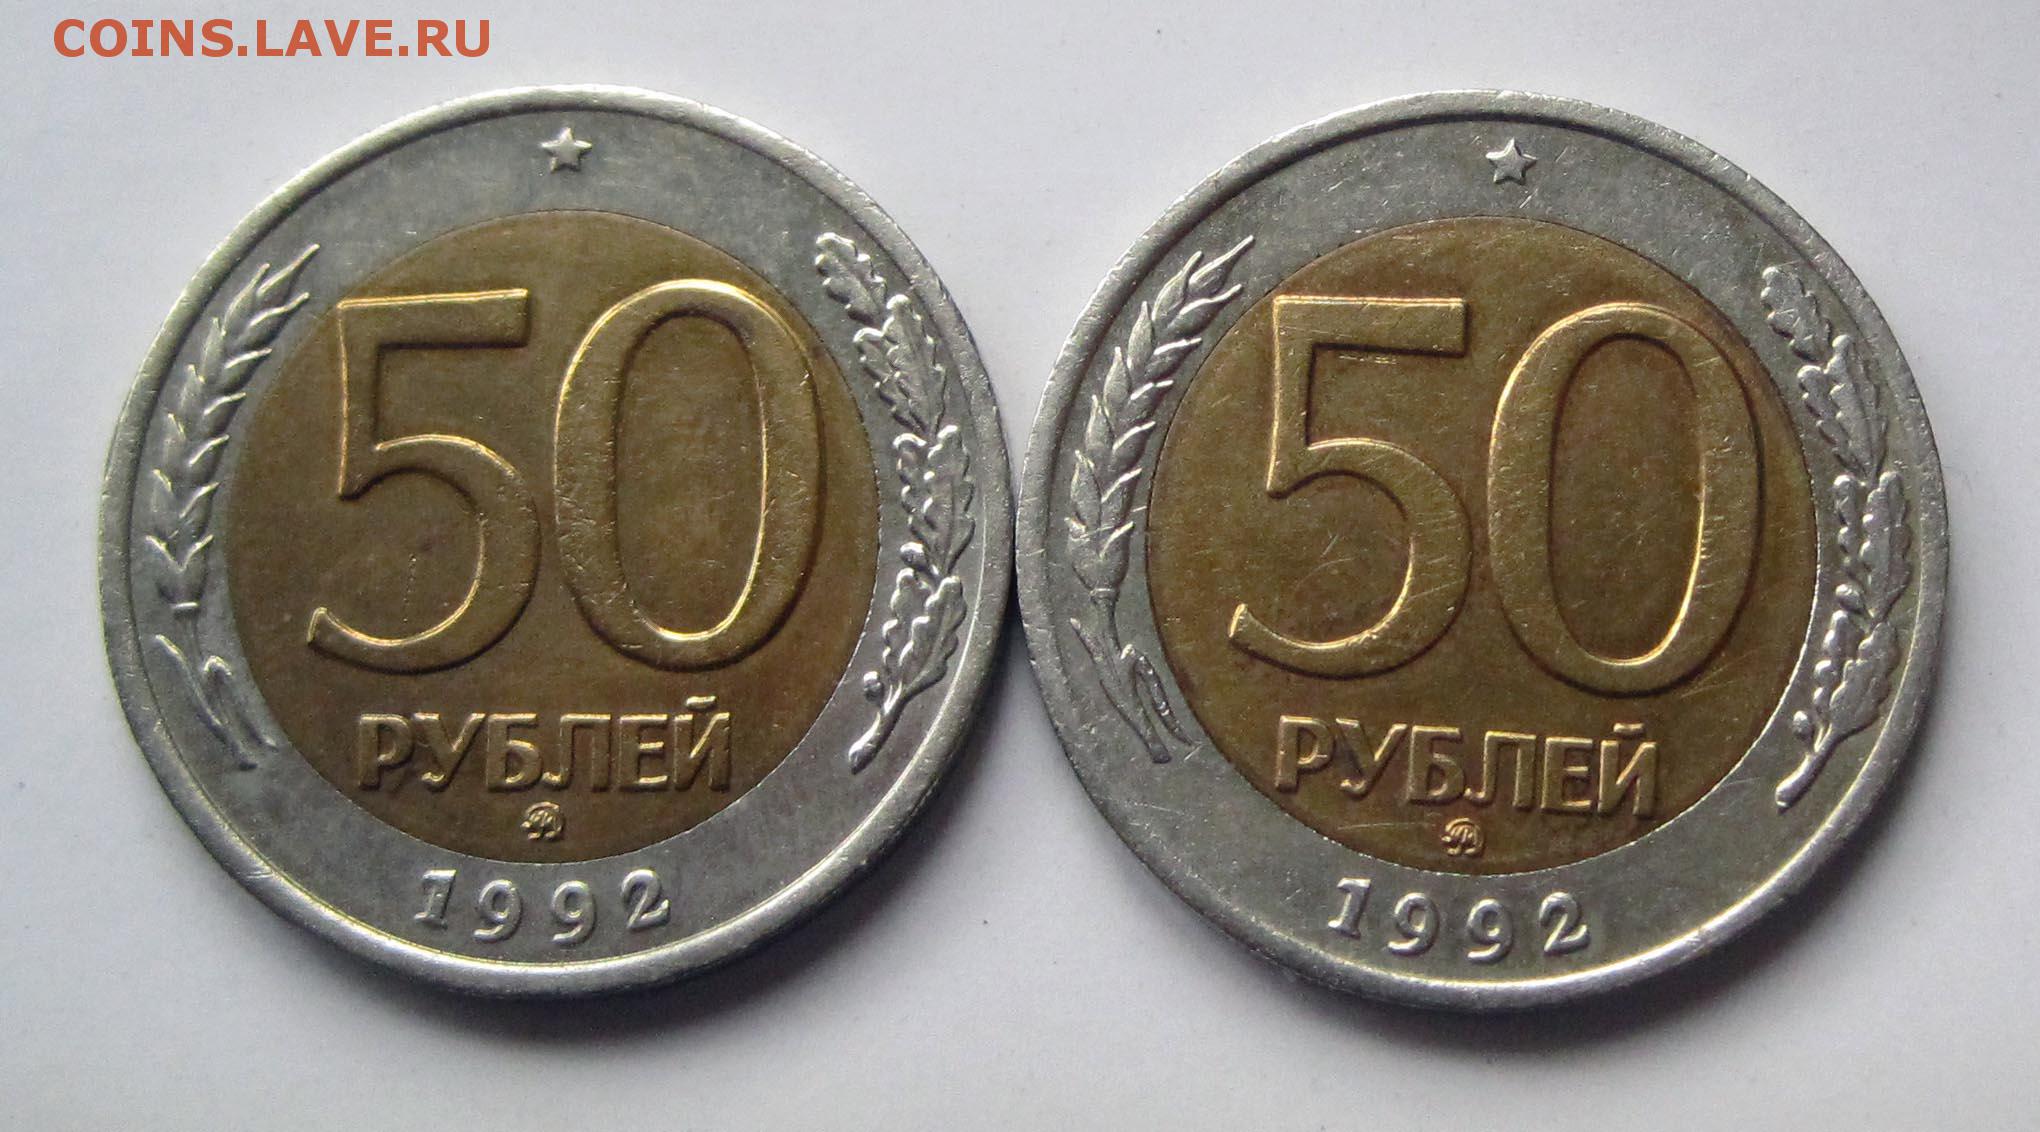 Монетный двор ММД И ЛМД 1992